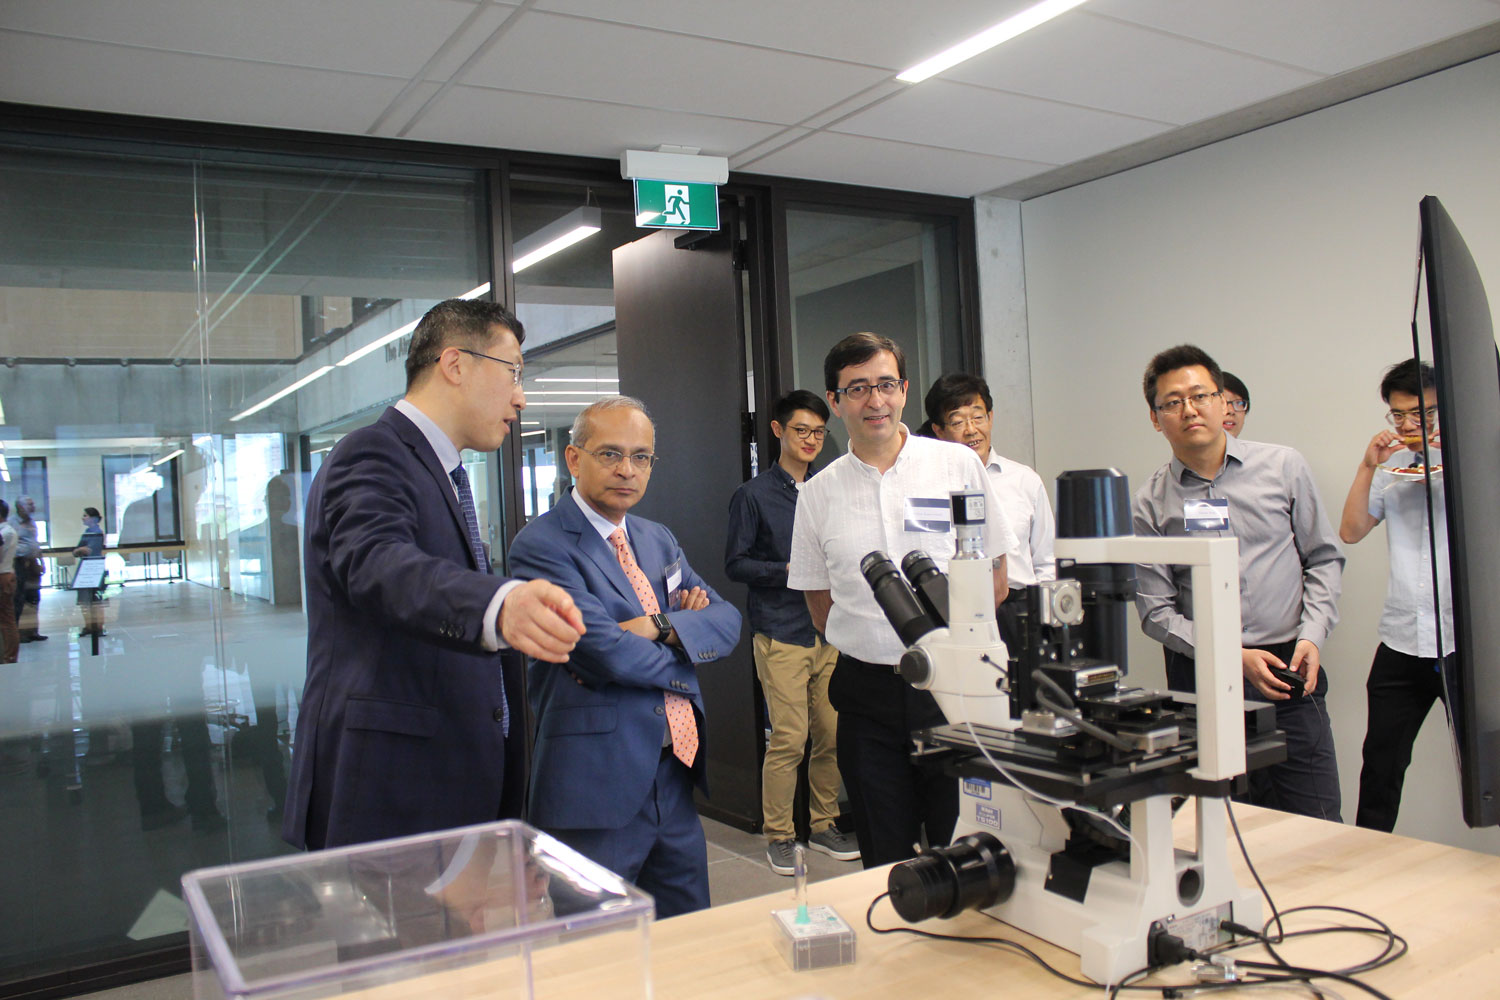 Profs. Yu Sun, Vivek Goel and Ramin Farnood at the Robotics Institute launch, May 25, 2019. Photo courtesy Xiaoyu Zhu.